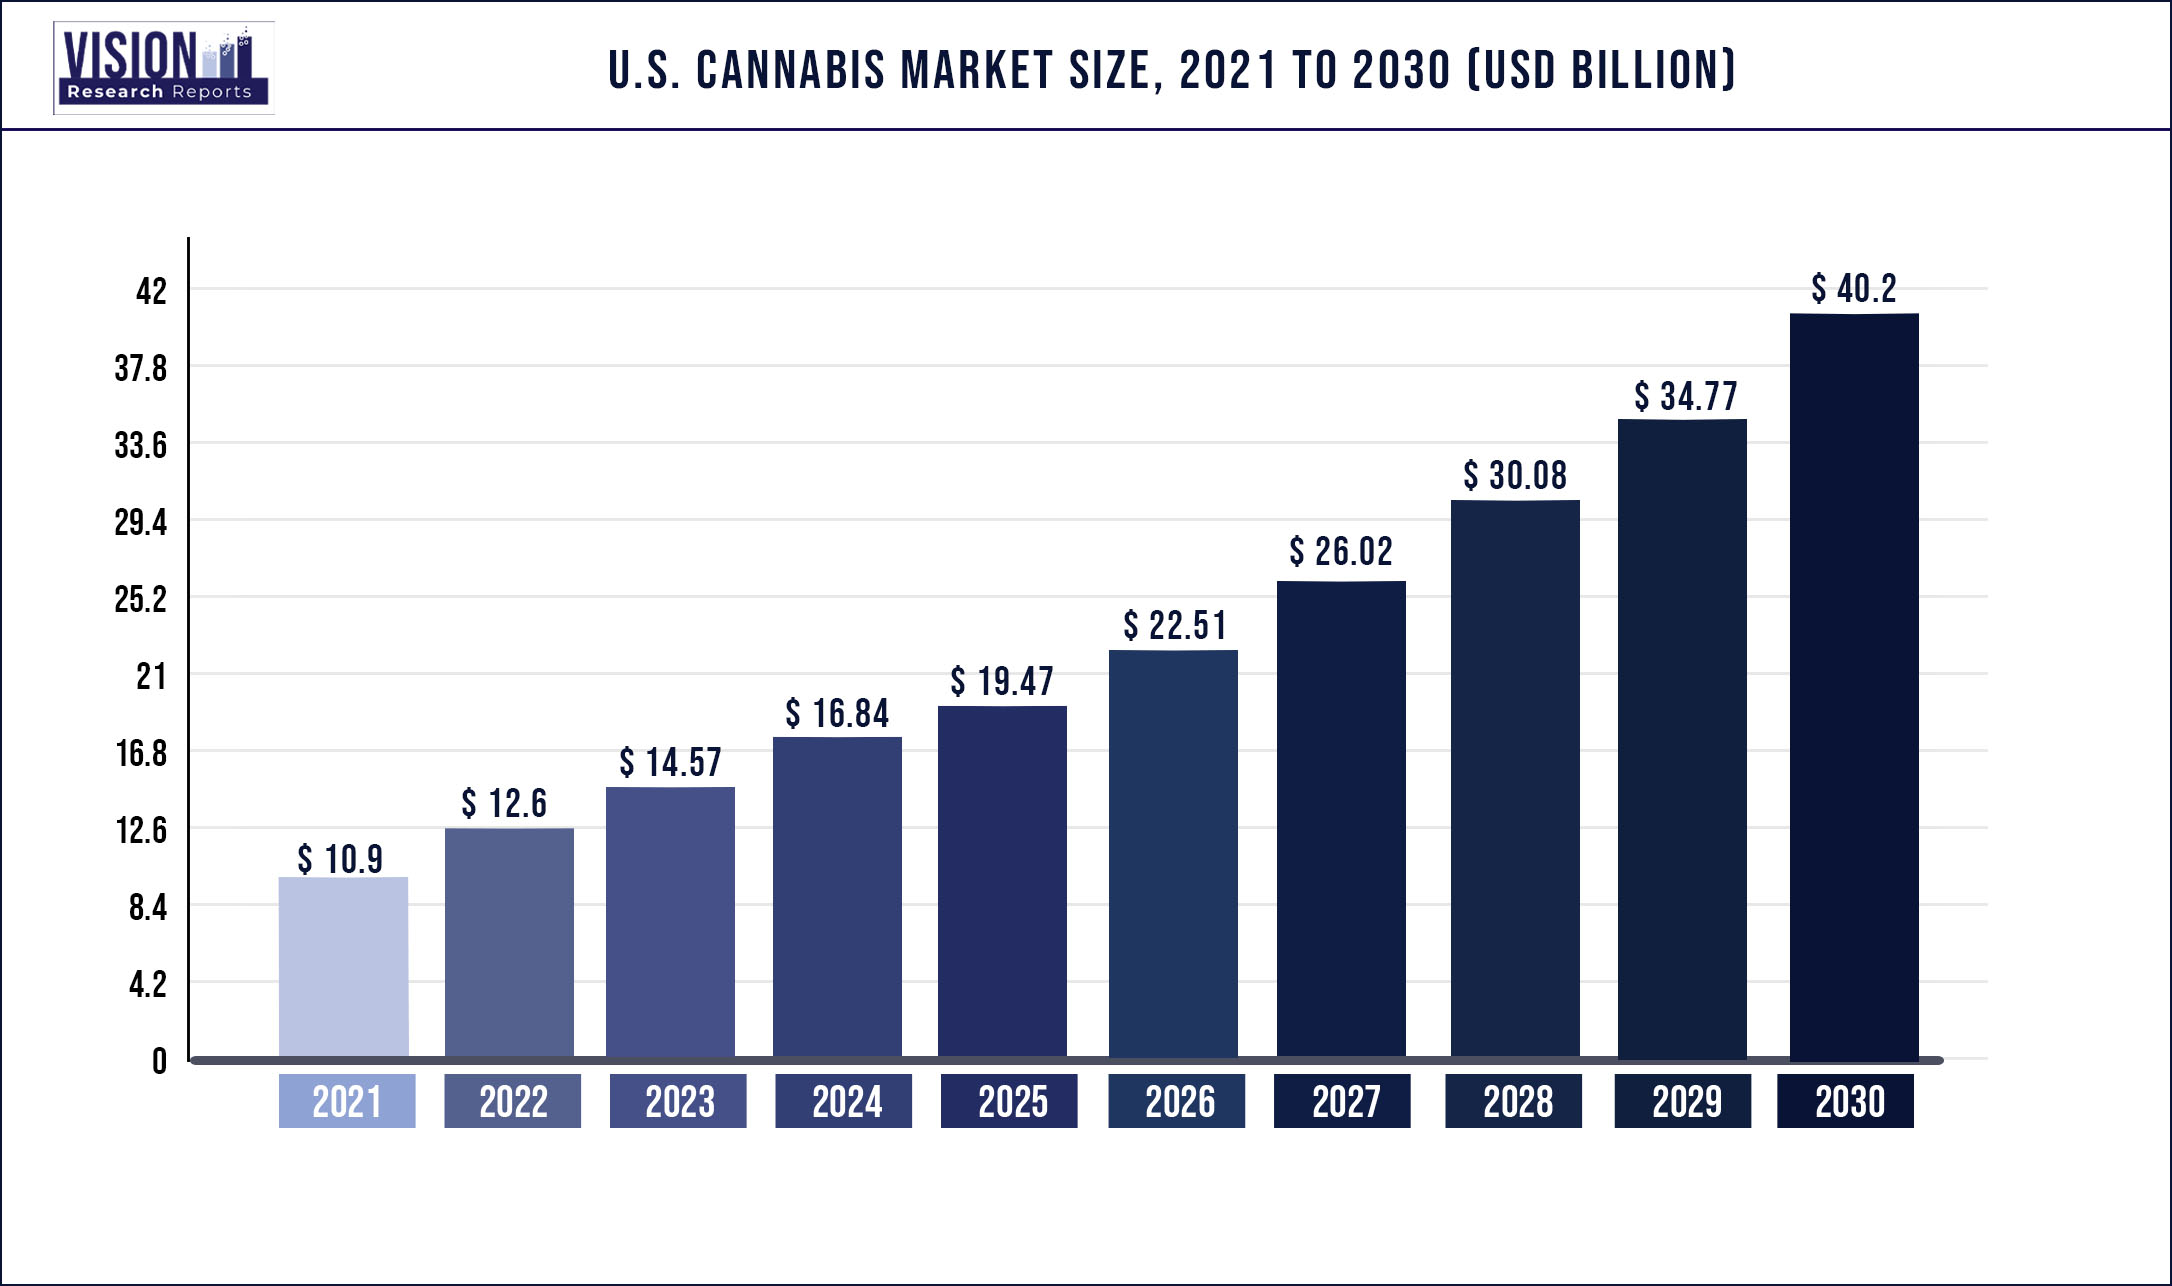 U.S. Cannabis Market Size 2021 to 2030